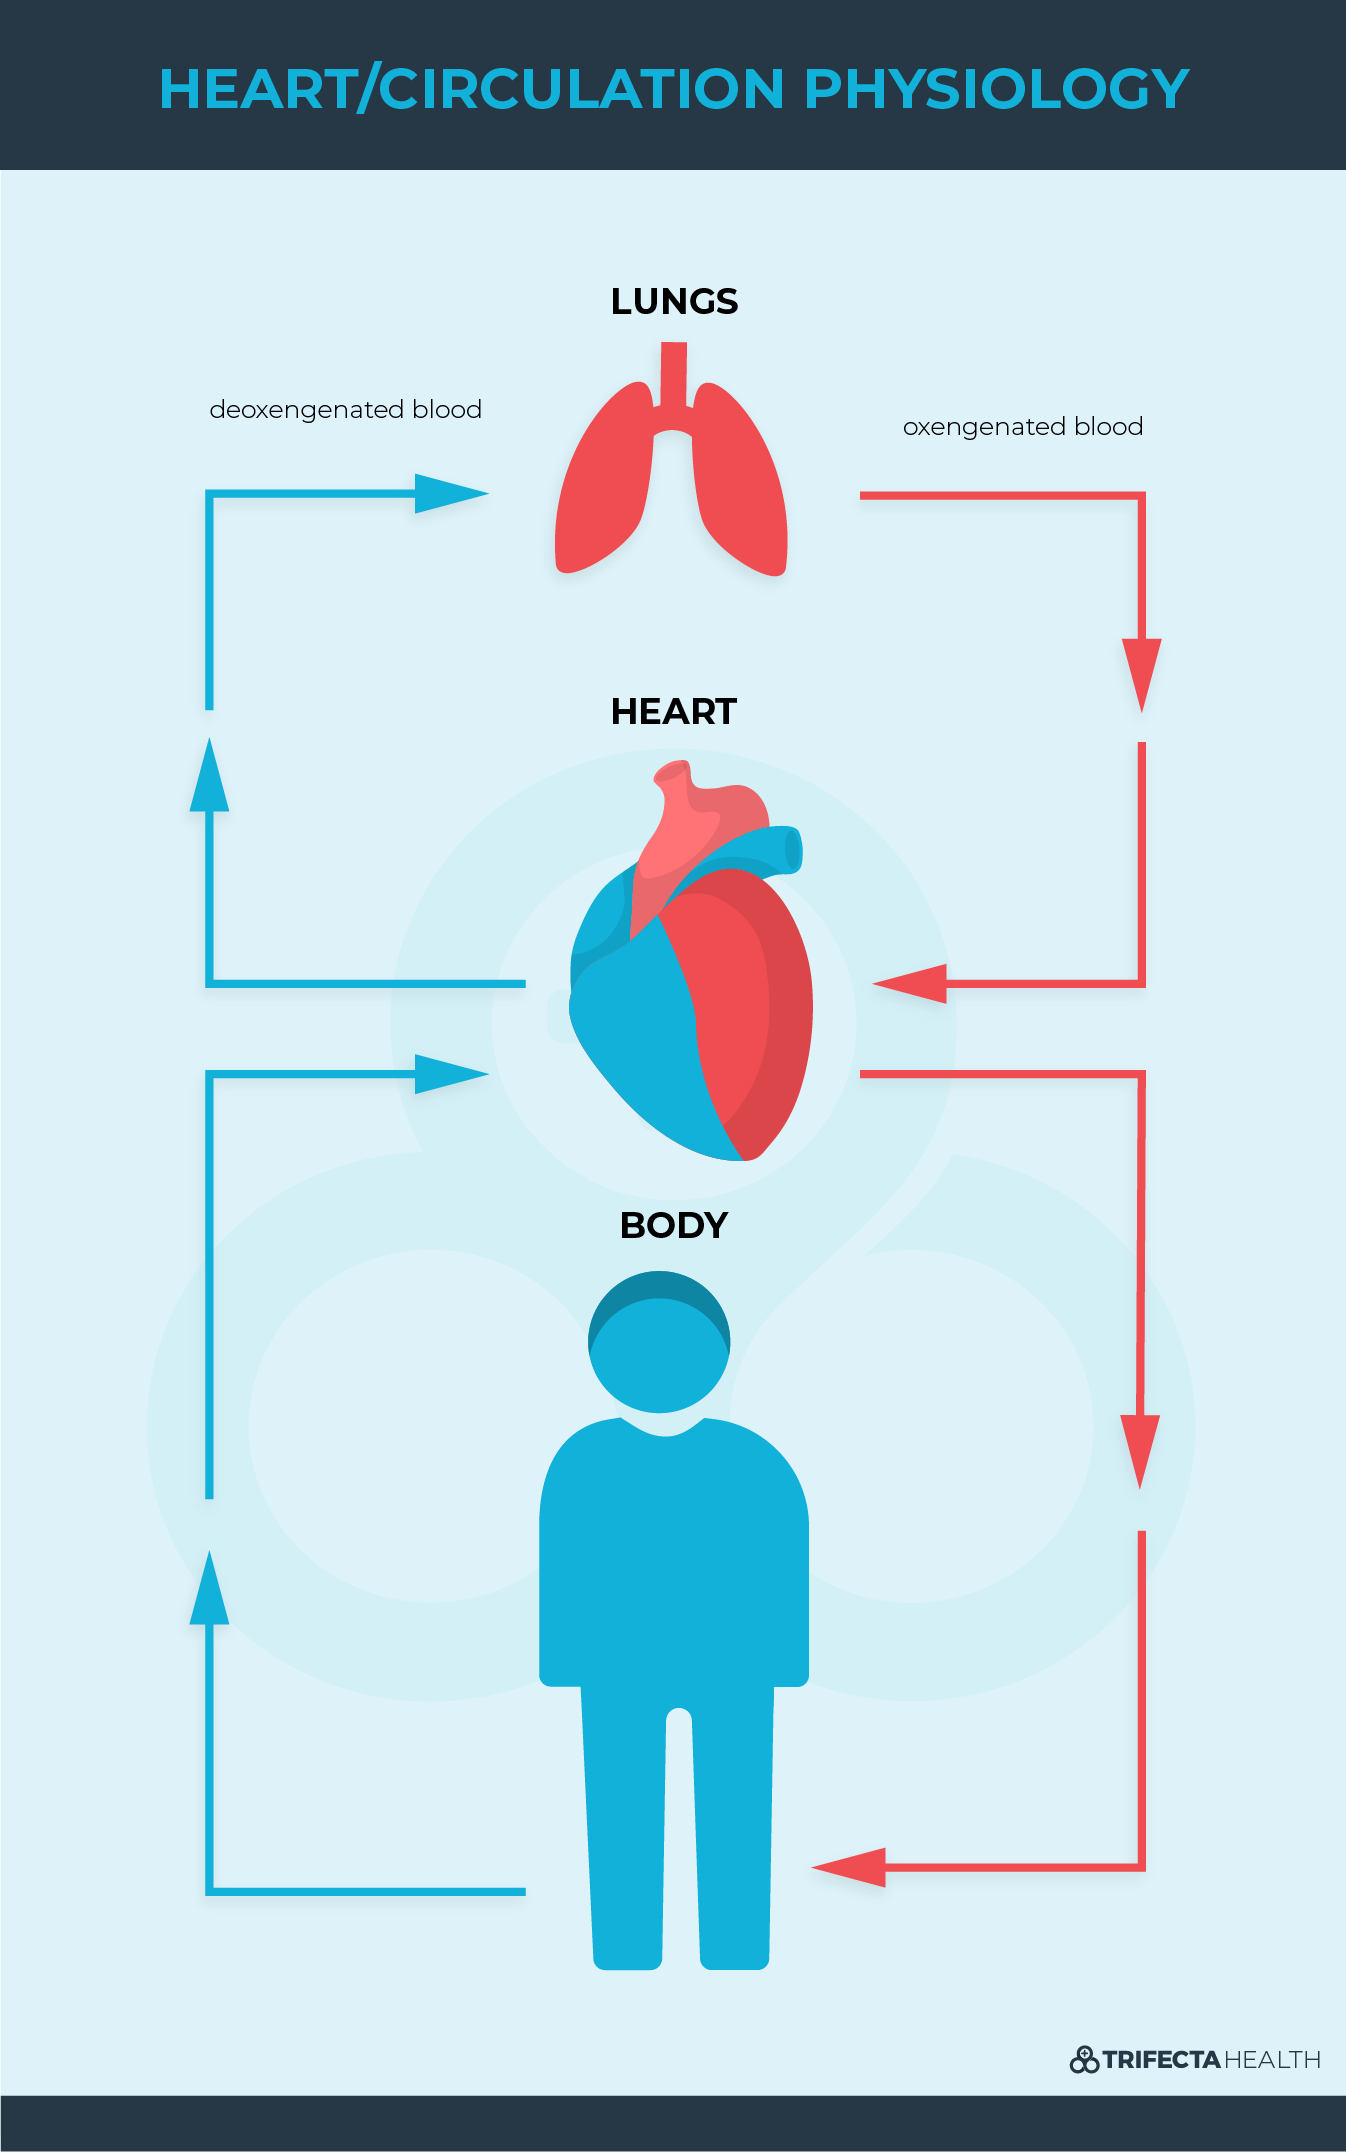 Diagrams_ Heart-circulation physiology 